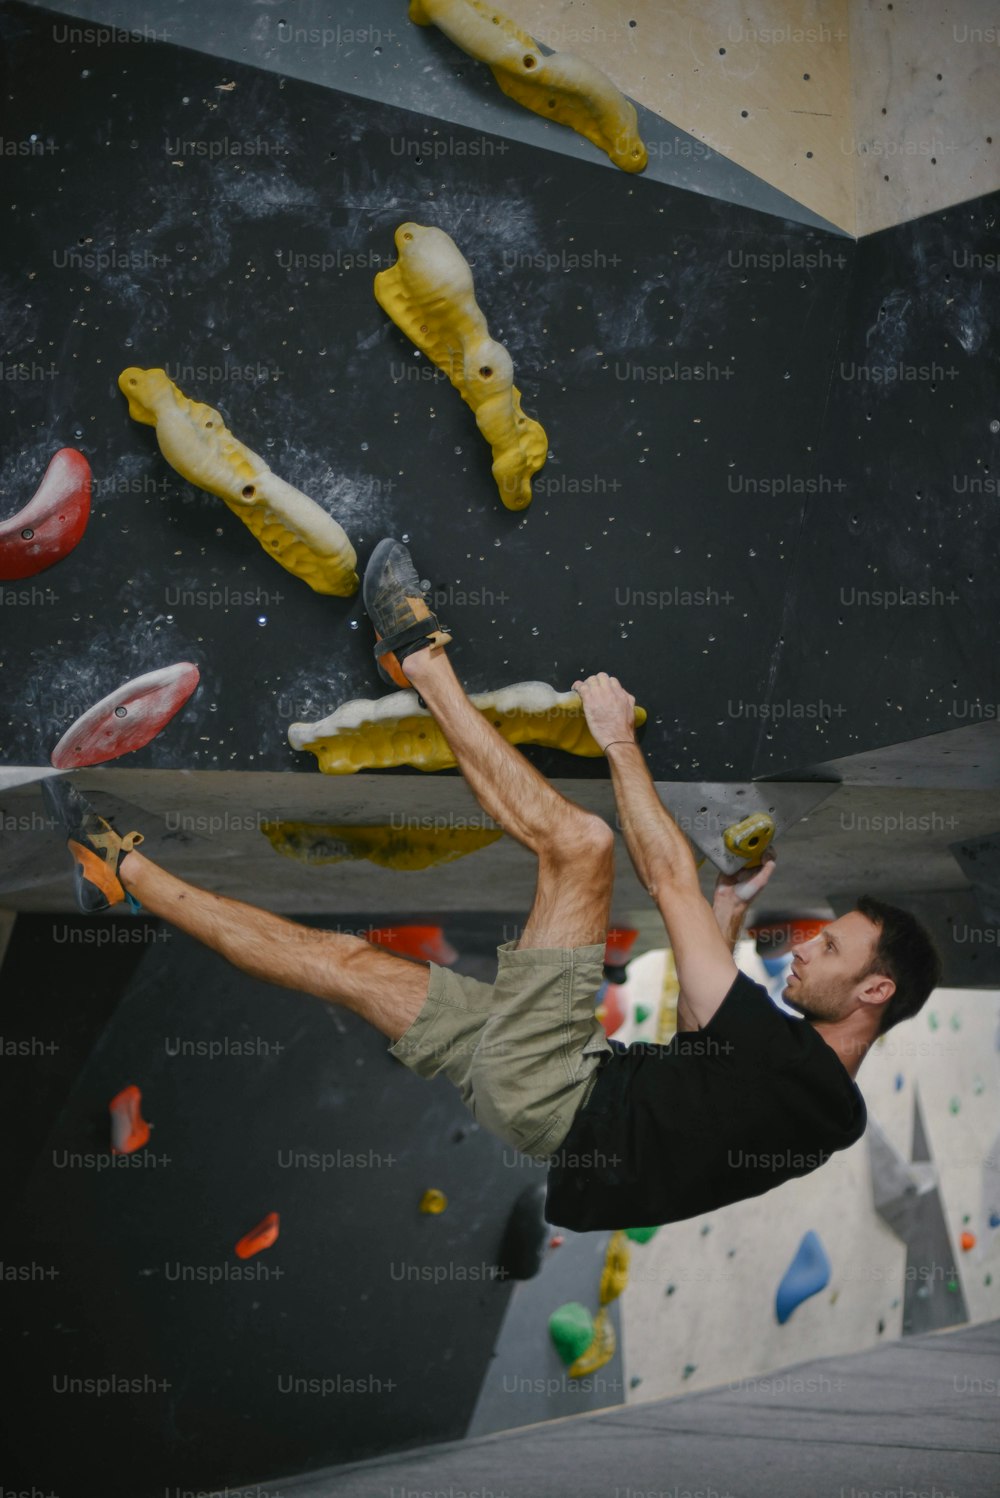 a man on a climbing wall doing a trick